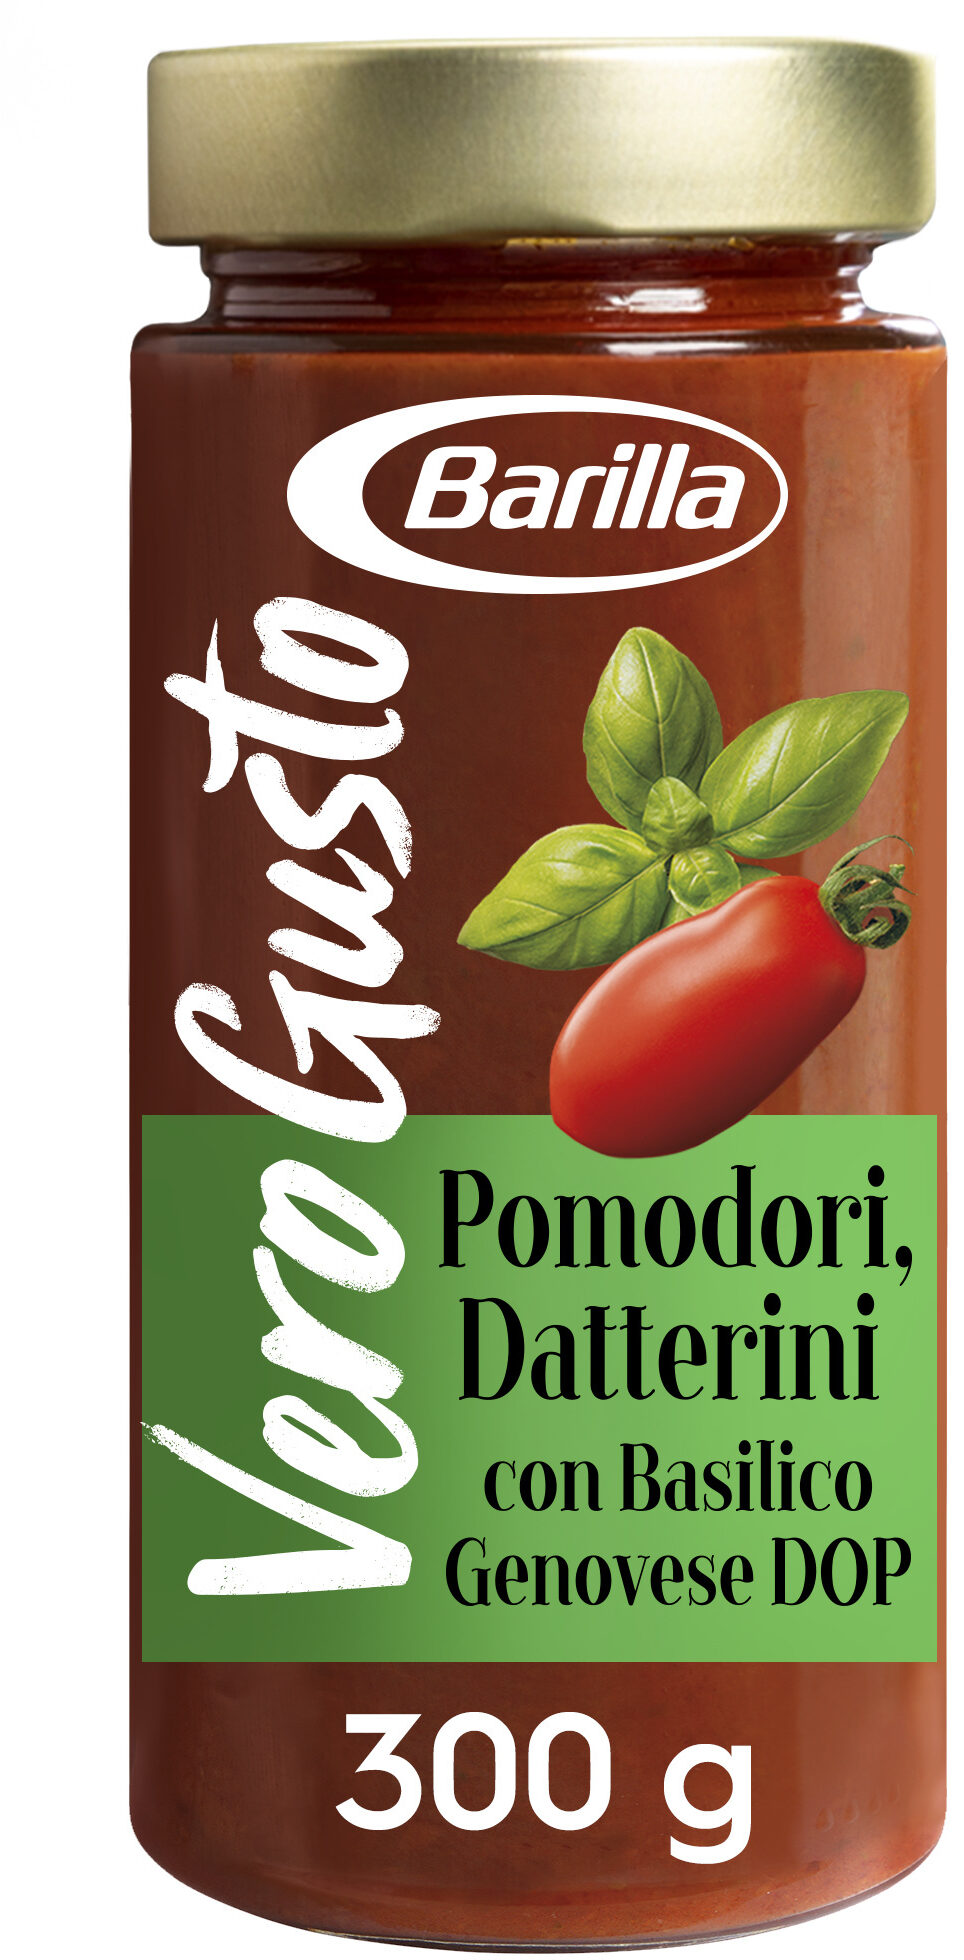 Barilla vero gusto sauce tomates au basilic 300g - Produkt - fr